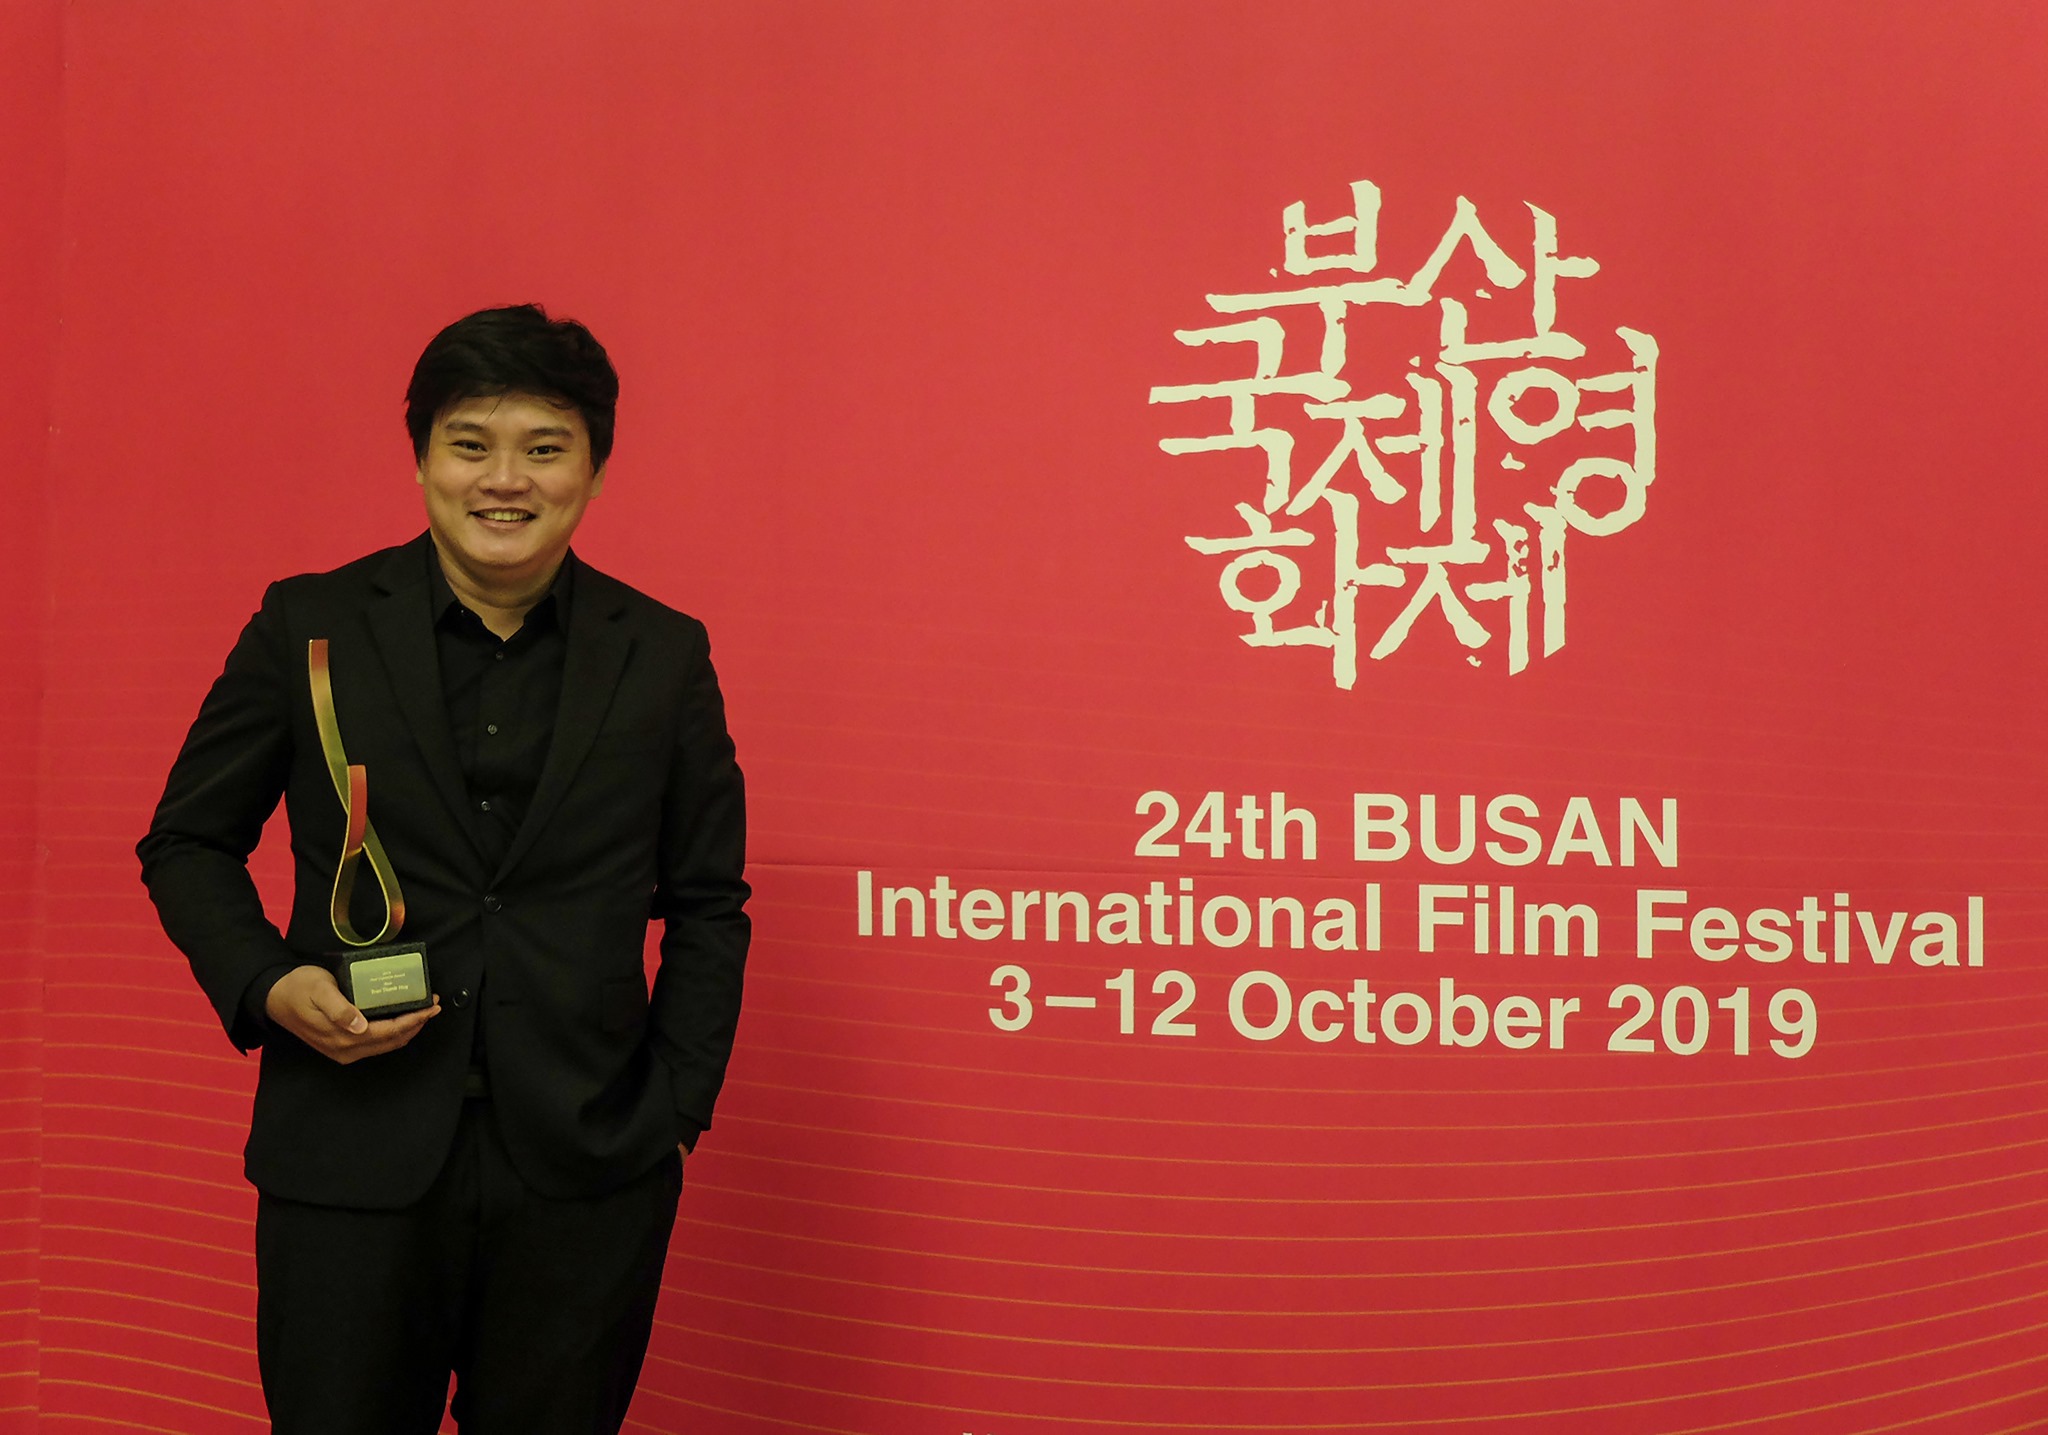  Tran Thanh Huy is happy to receive a prestigious award